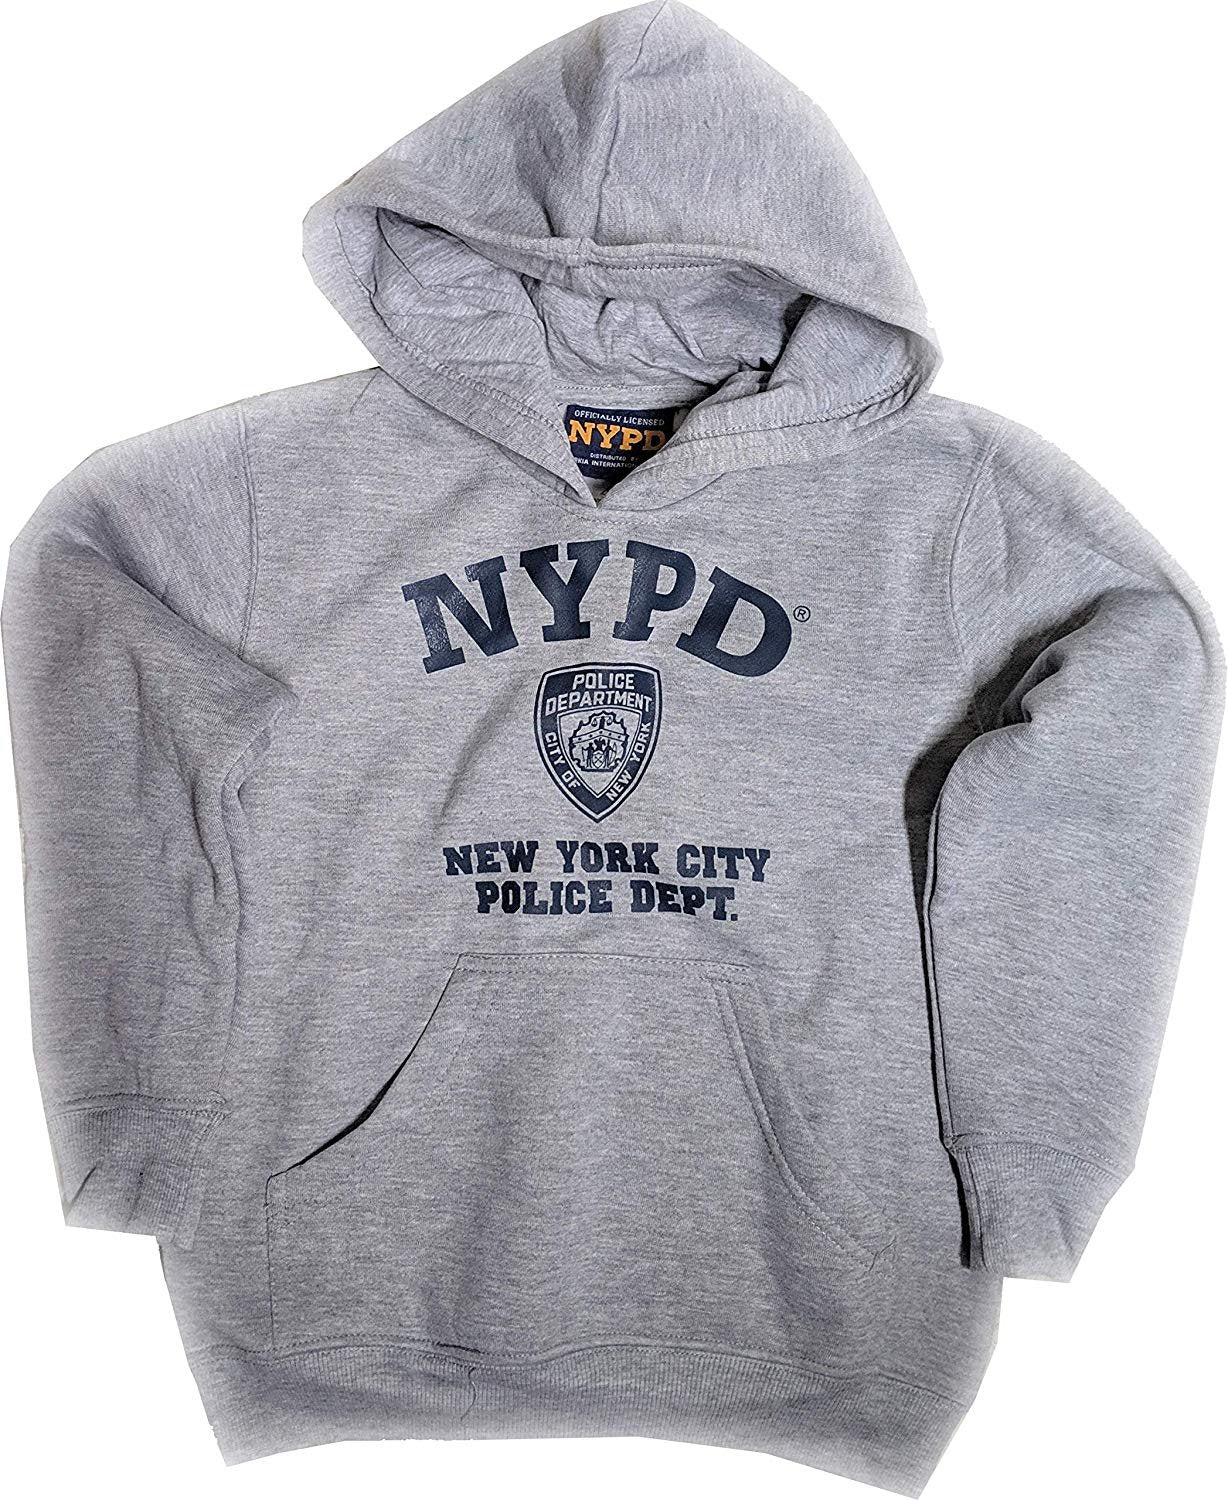 NYPD Kids Hoodie Navy Print Sweatshirt Gray Officially Licensed